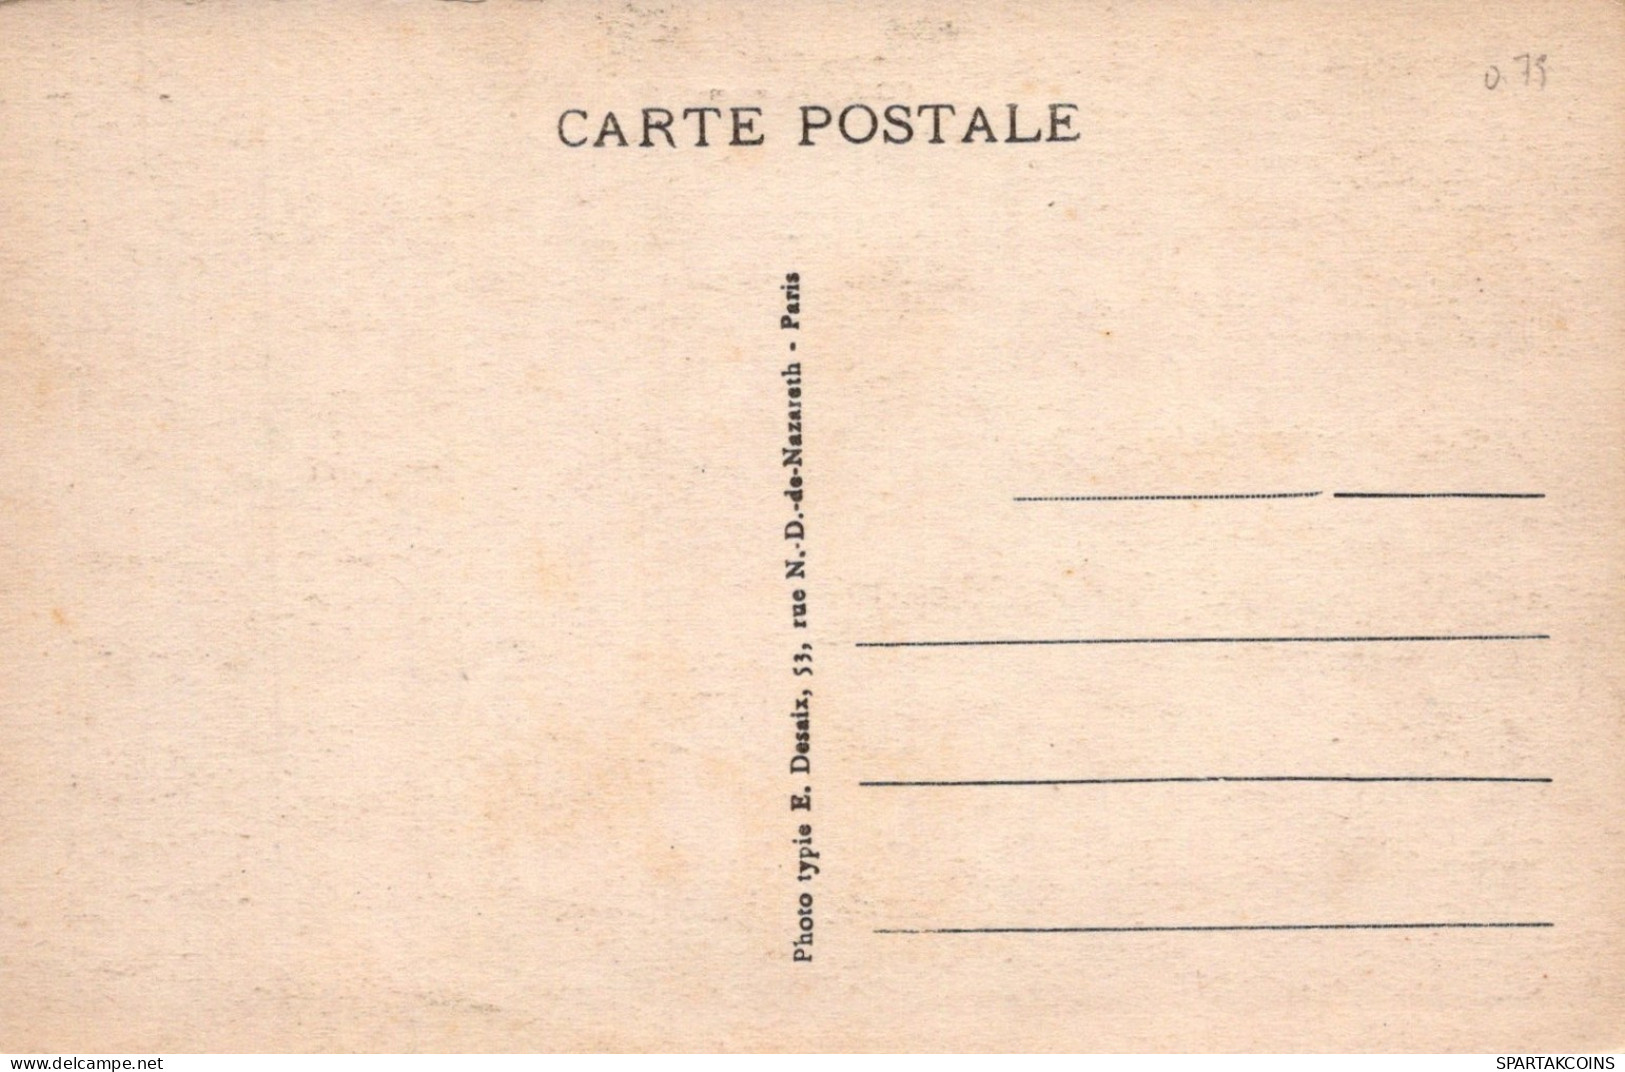 BELGIEN COO WASSERFALL Provinz Lüttich (Liège) Postkarte CPA Unposted #PAD025.DE - Stavelot